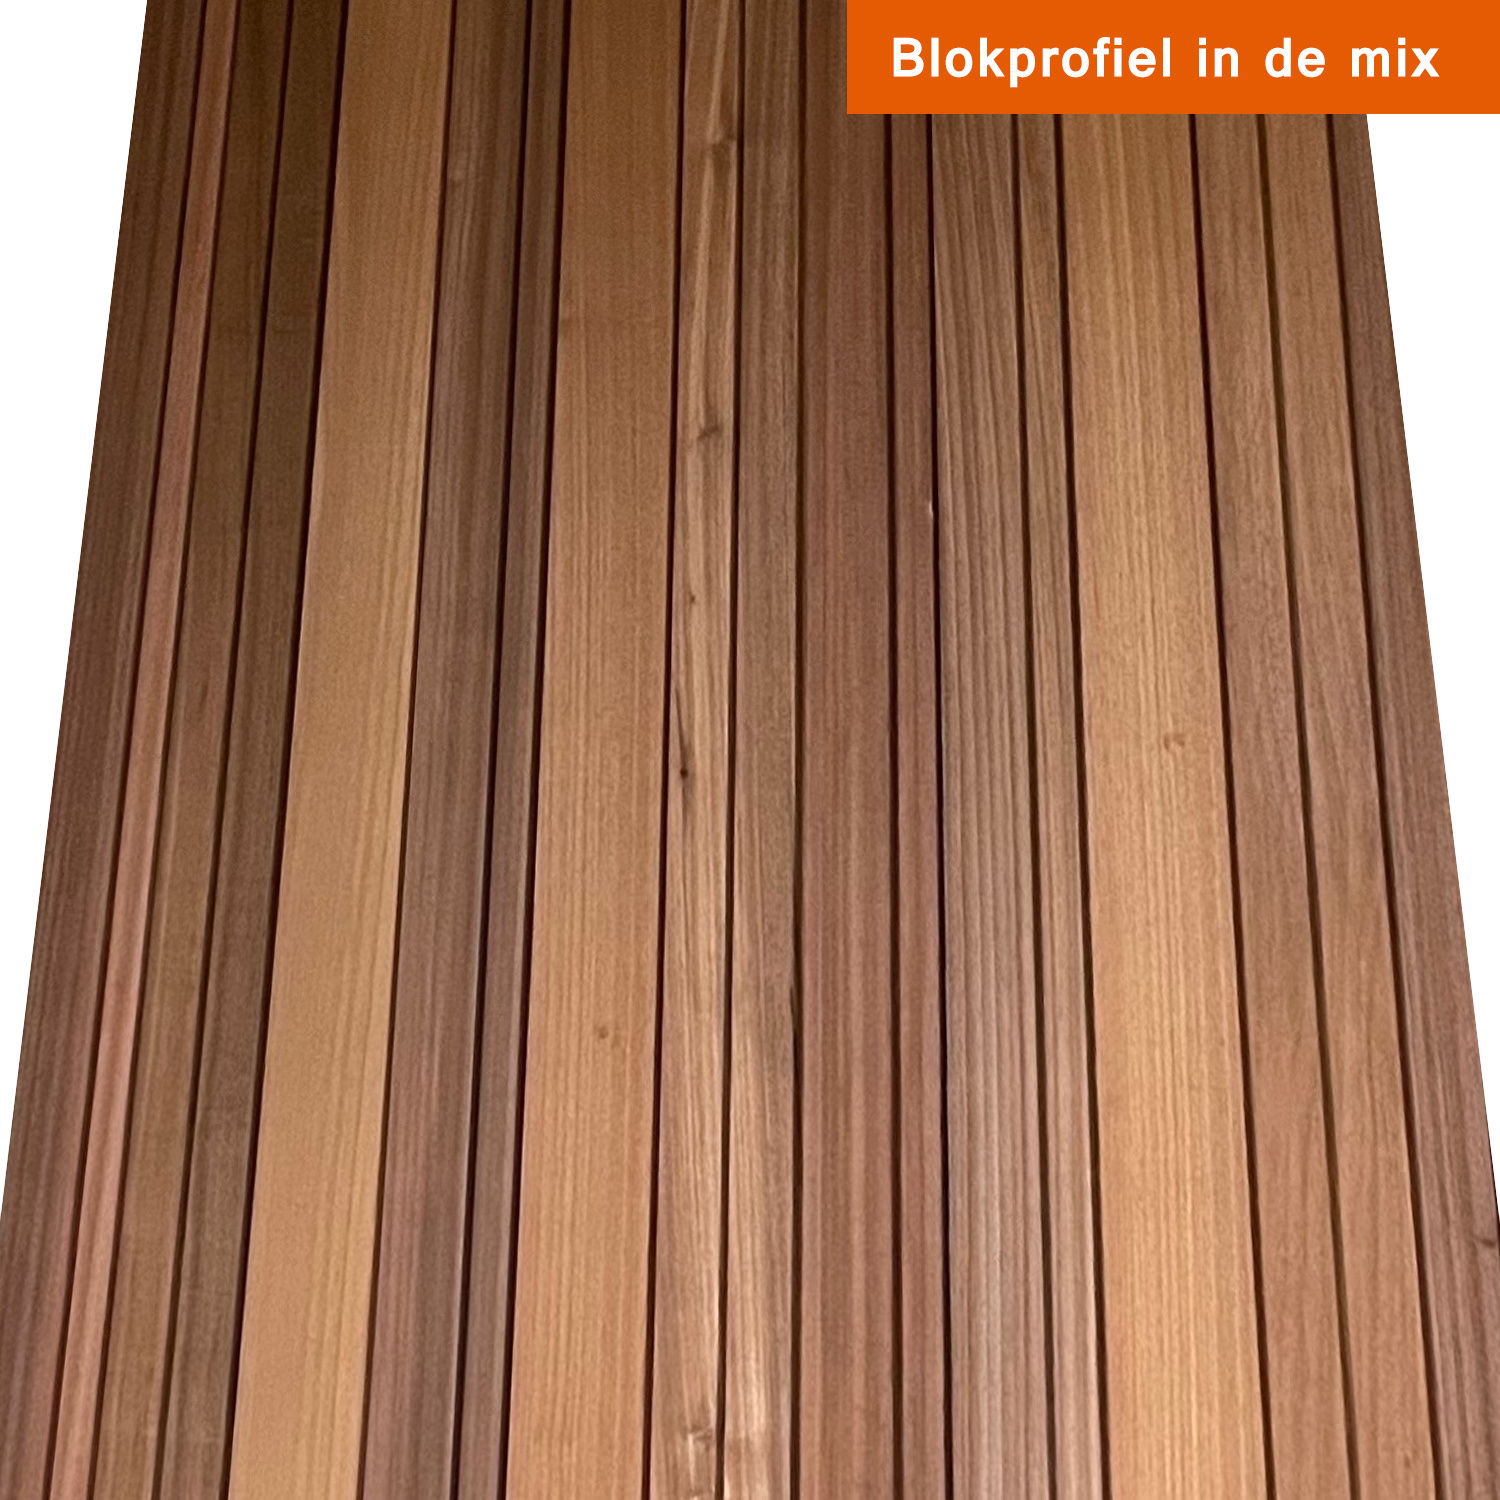  Thermowood Ayous dubbel 50-50-blokprofiel 21x125 mm - geschaafd- kunstmatig gedroogd (kd 8-12%) - thermisch gemodificeerd Ayous hout (thermohout)